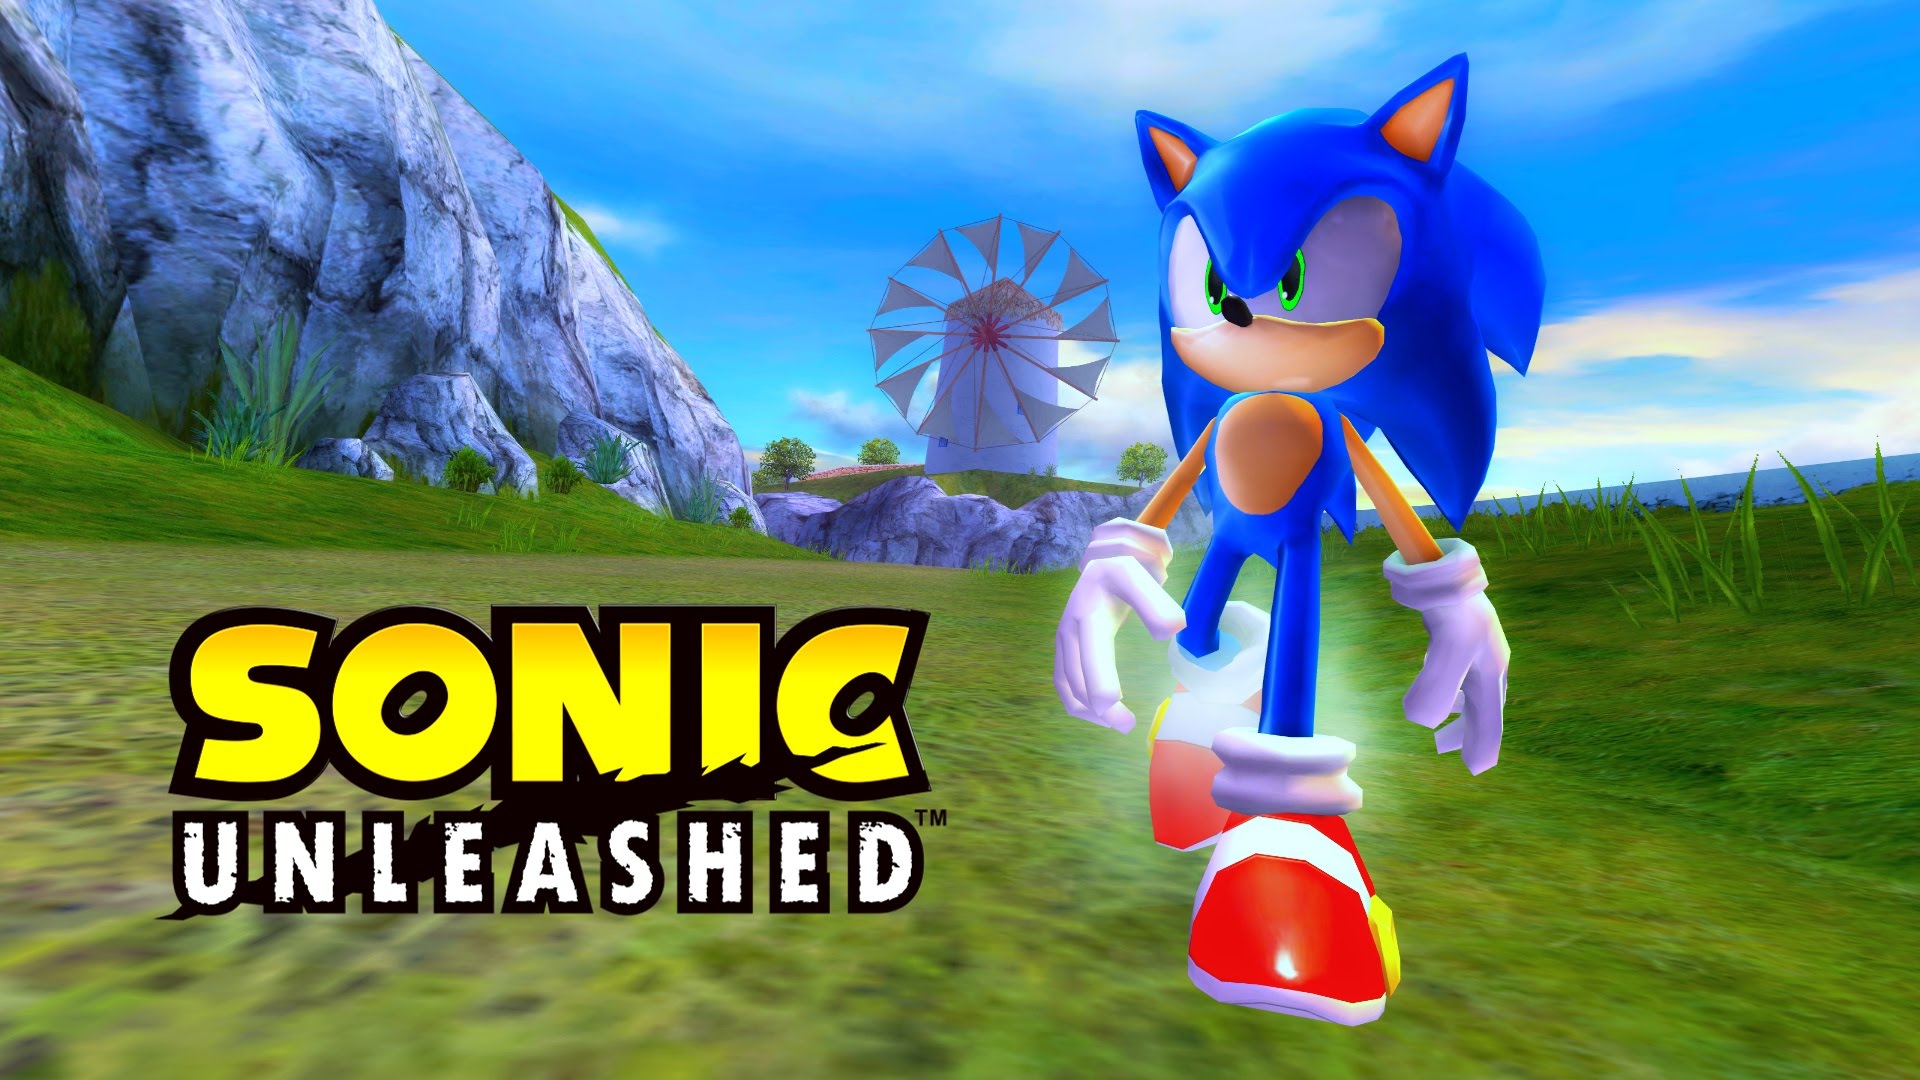 Sonic Unleashed Wii Windmill Isle Day Full HD 1080p